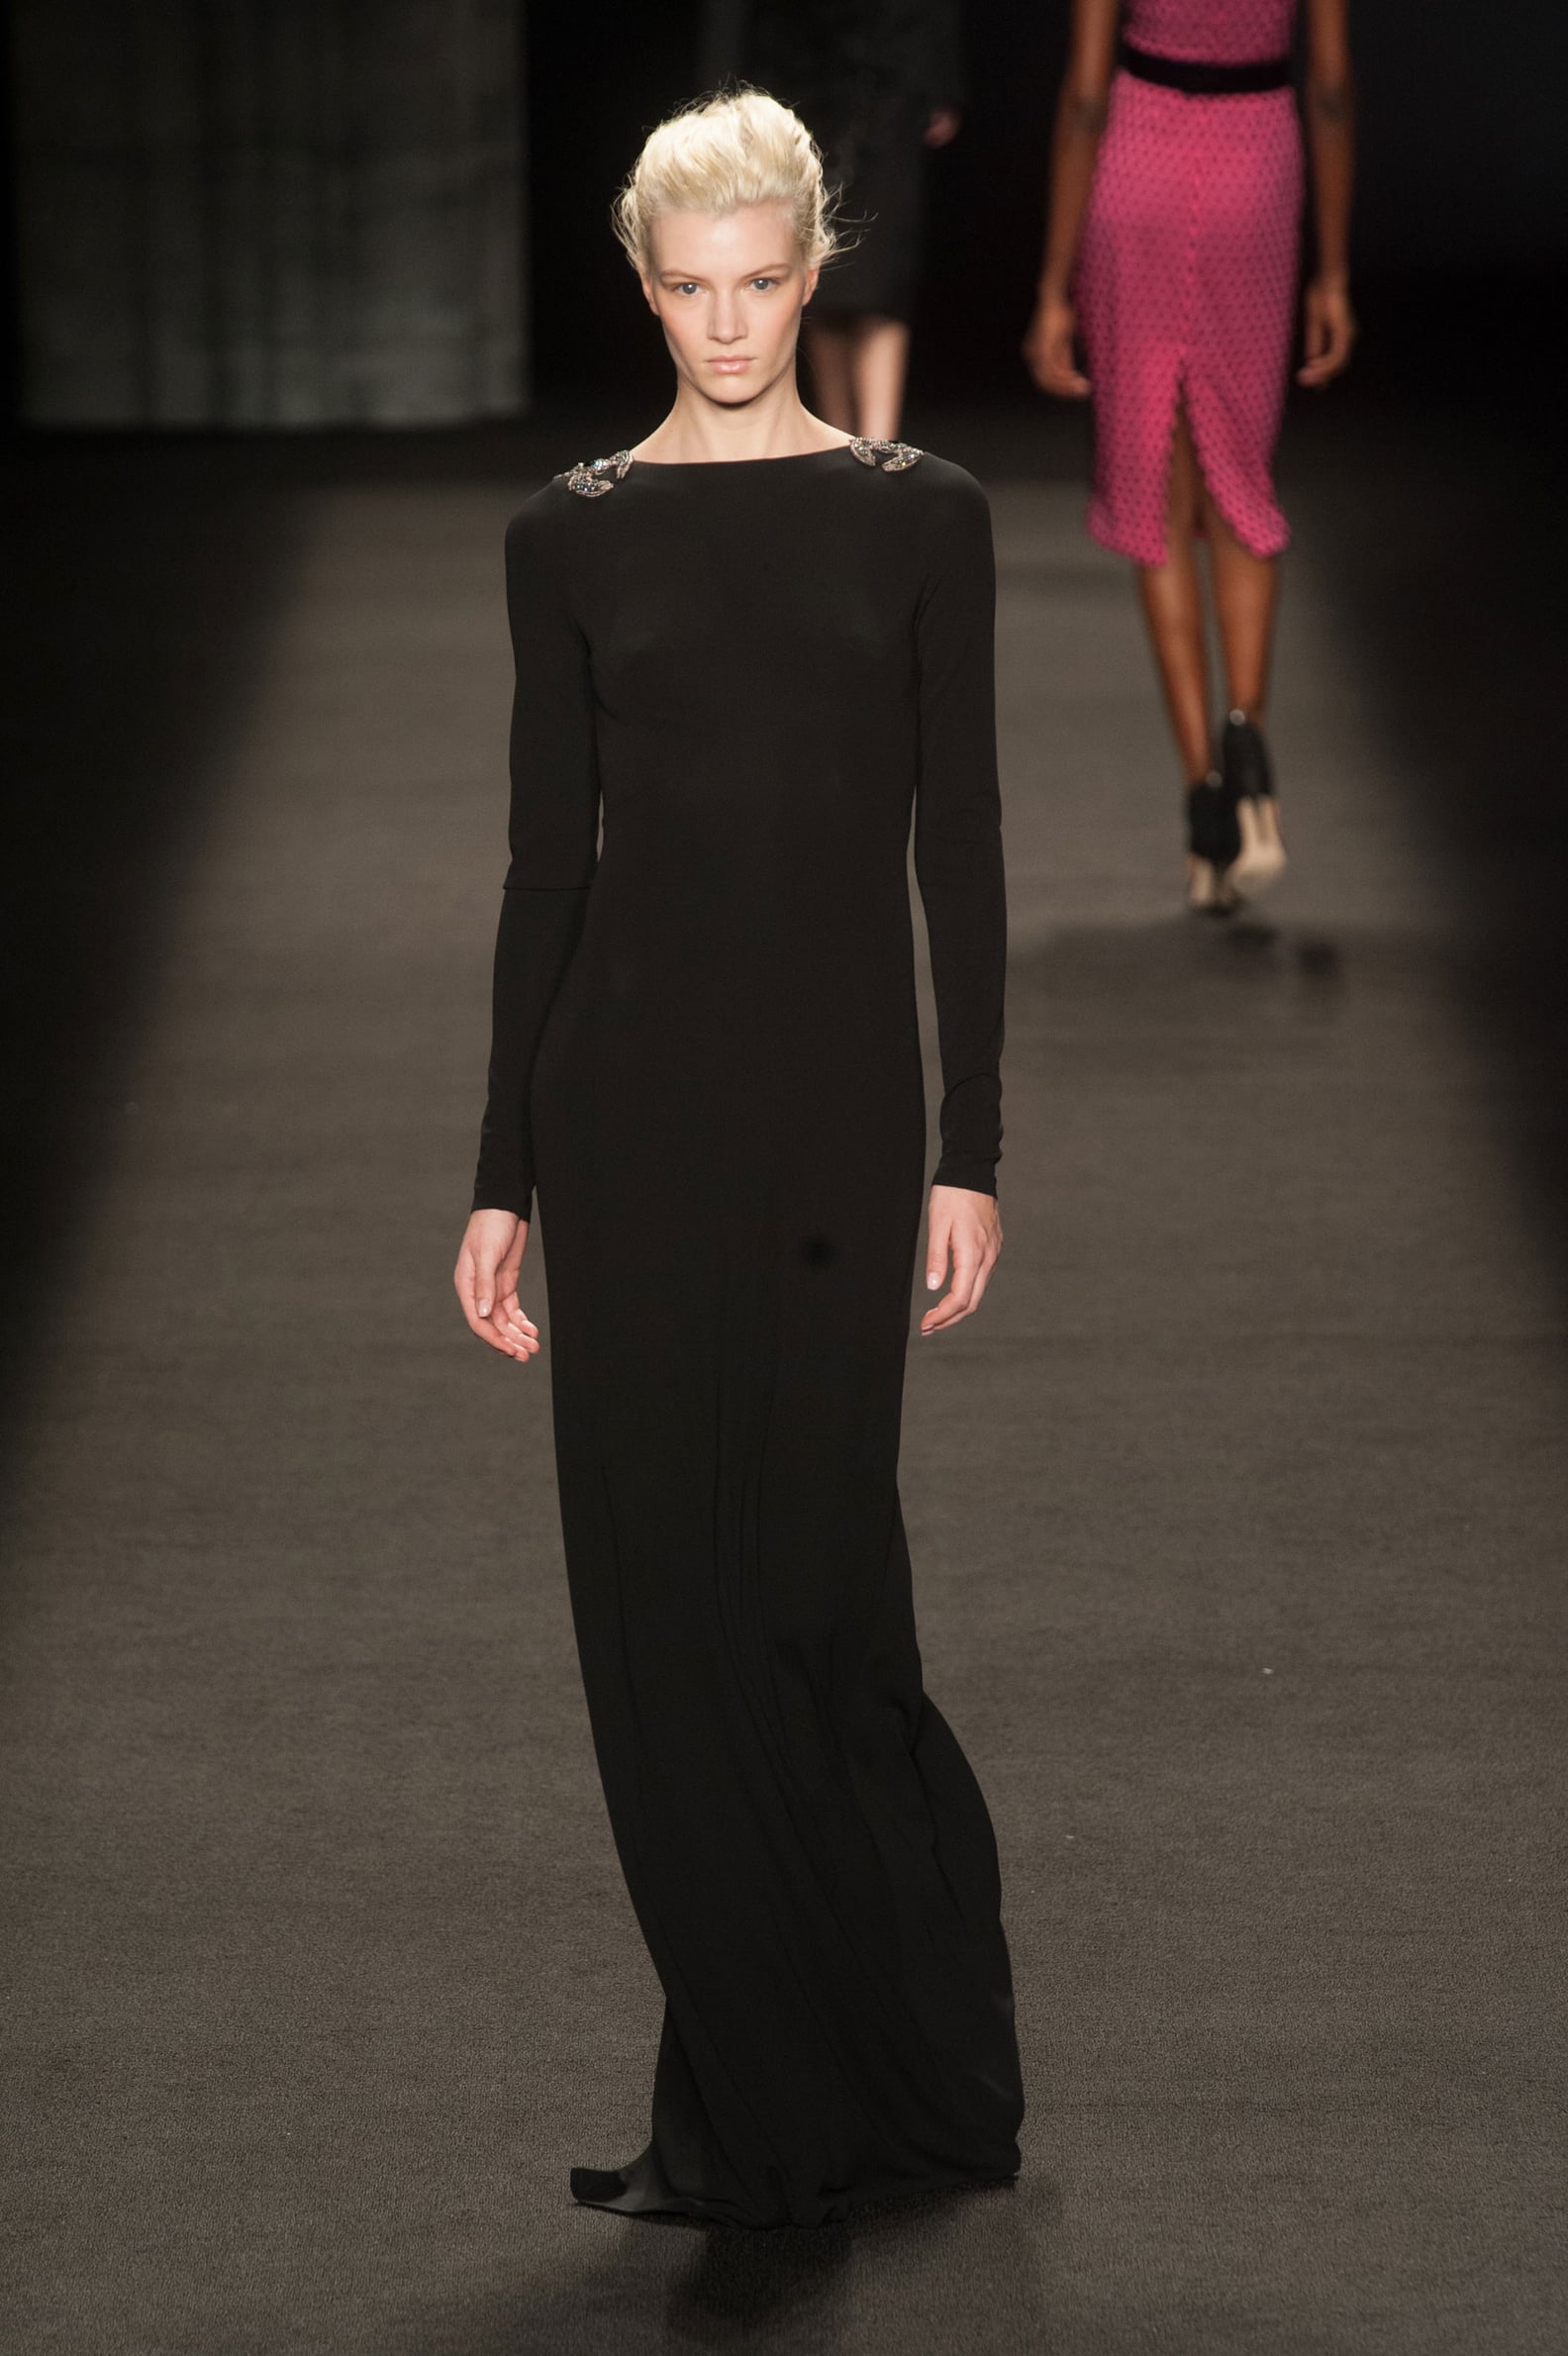 Monique Lhuillier Fall 2014 Runway Show | NY Fashion Week | POPSUGAR ...